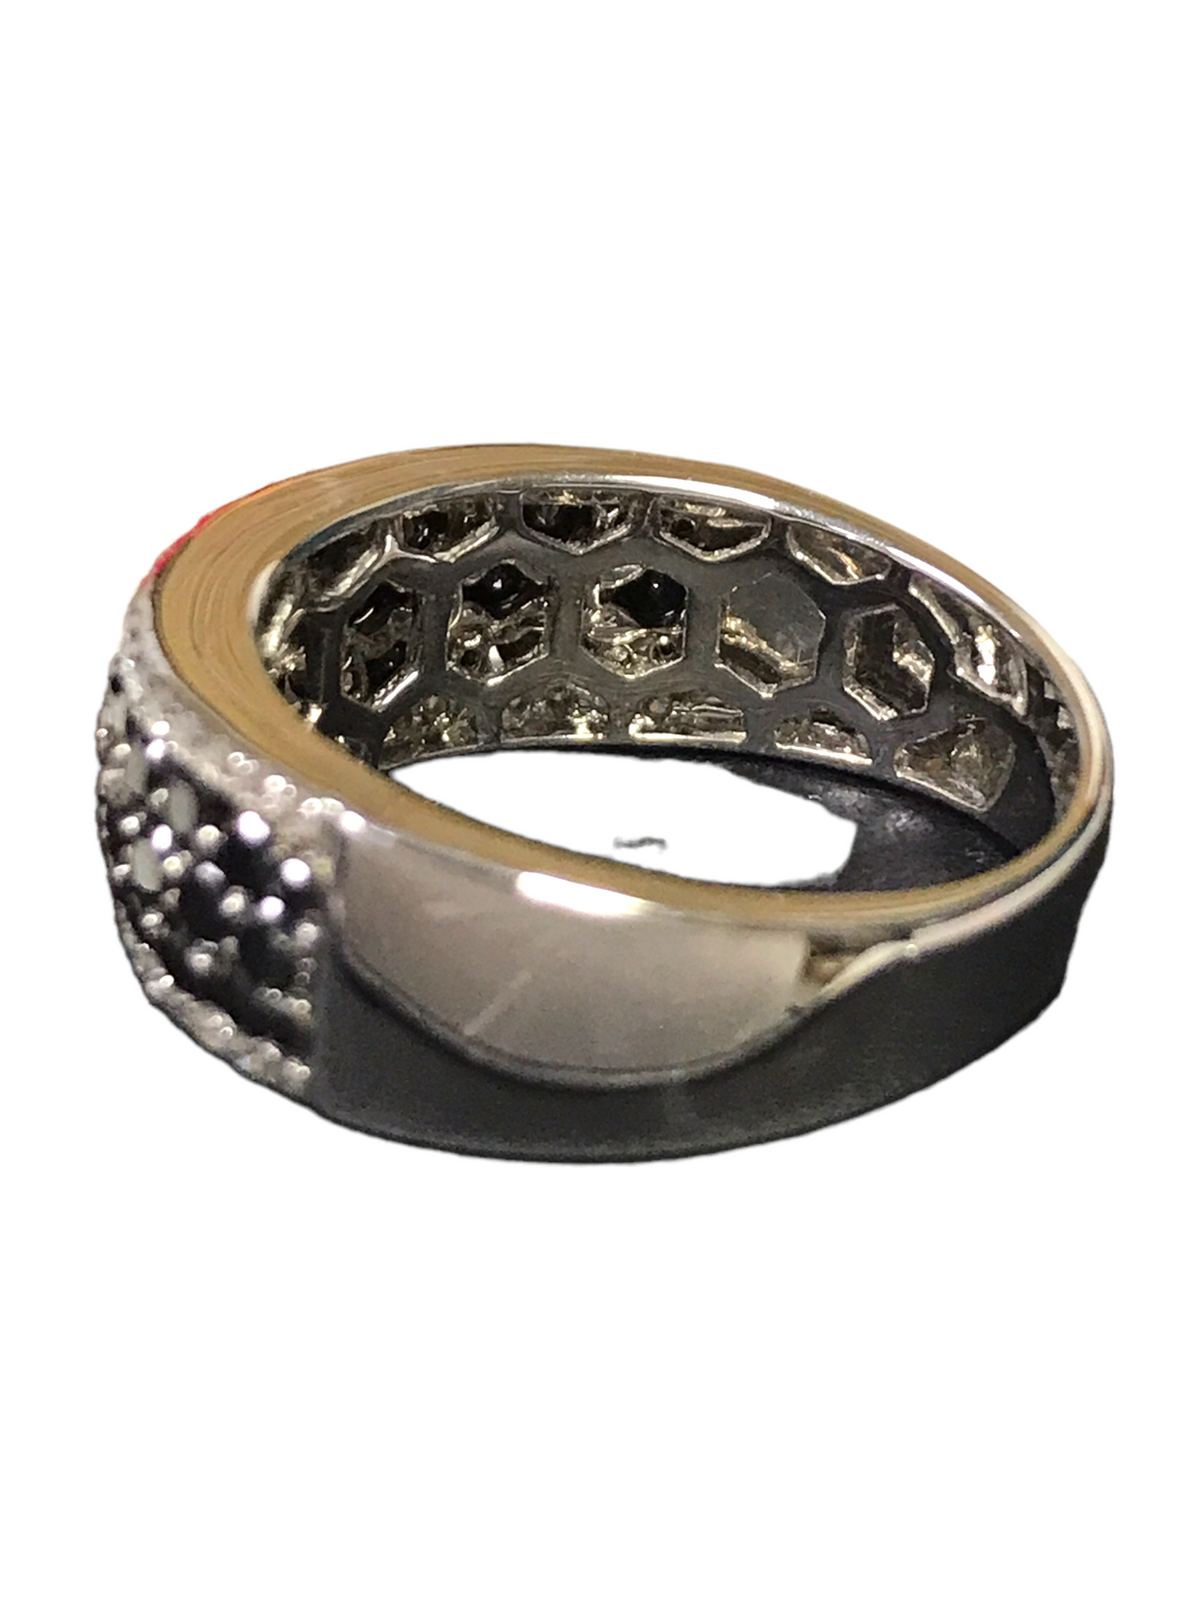 14K White Gold Black Diamond Ladies Ring Size 7